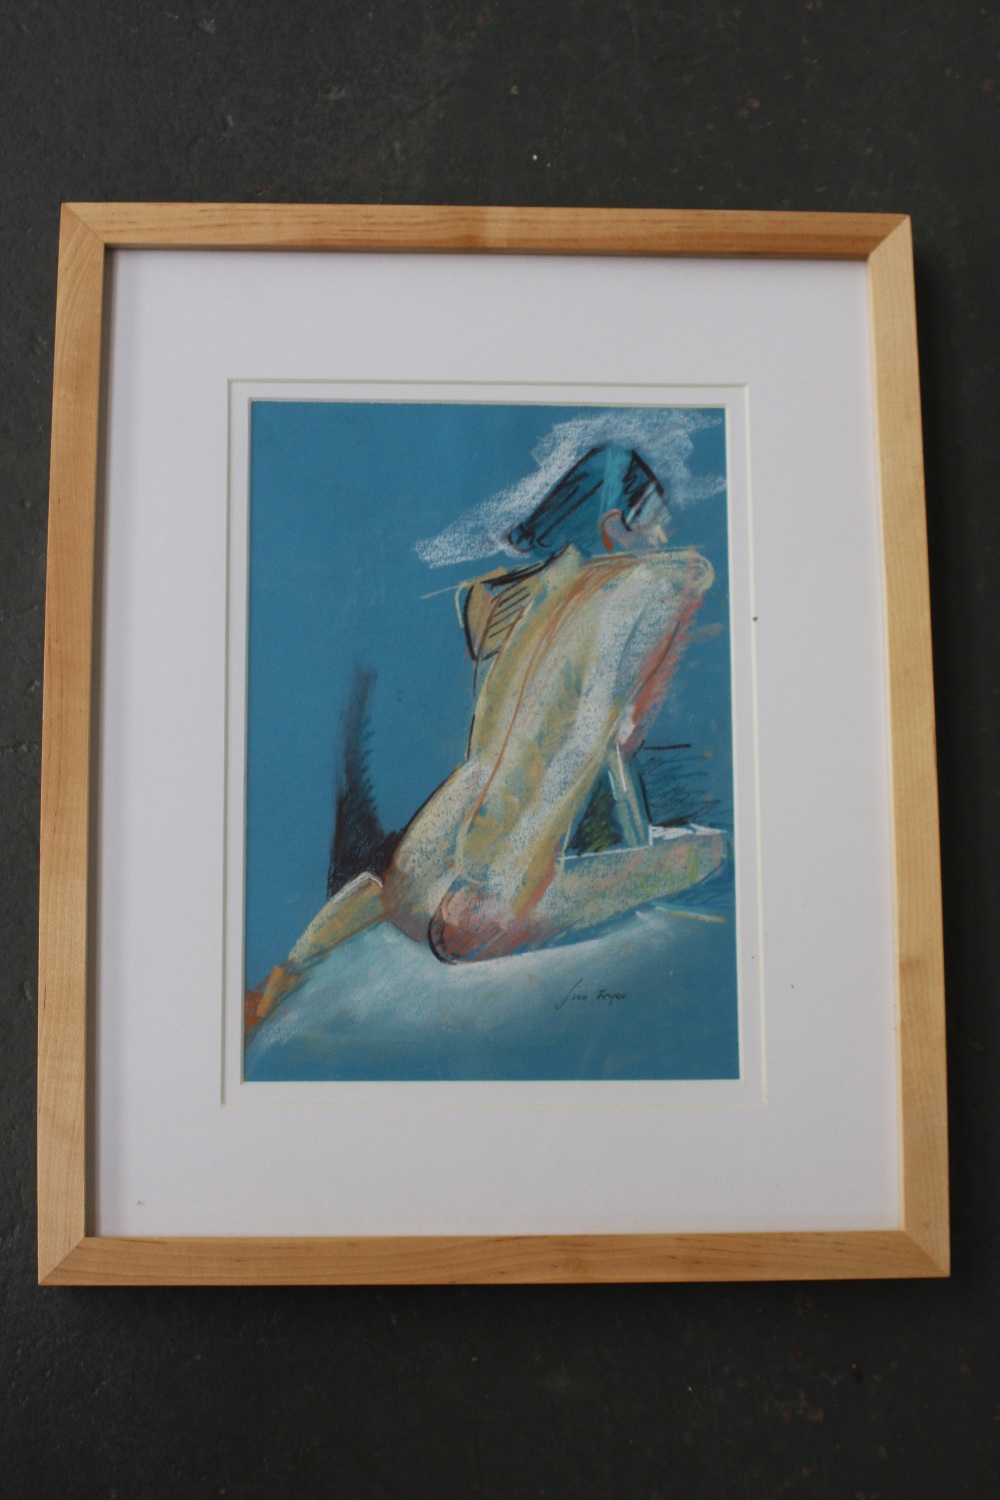 Sue Fryer, Nude, pastel on paper, framed